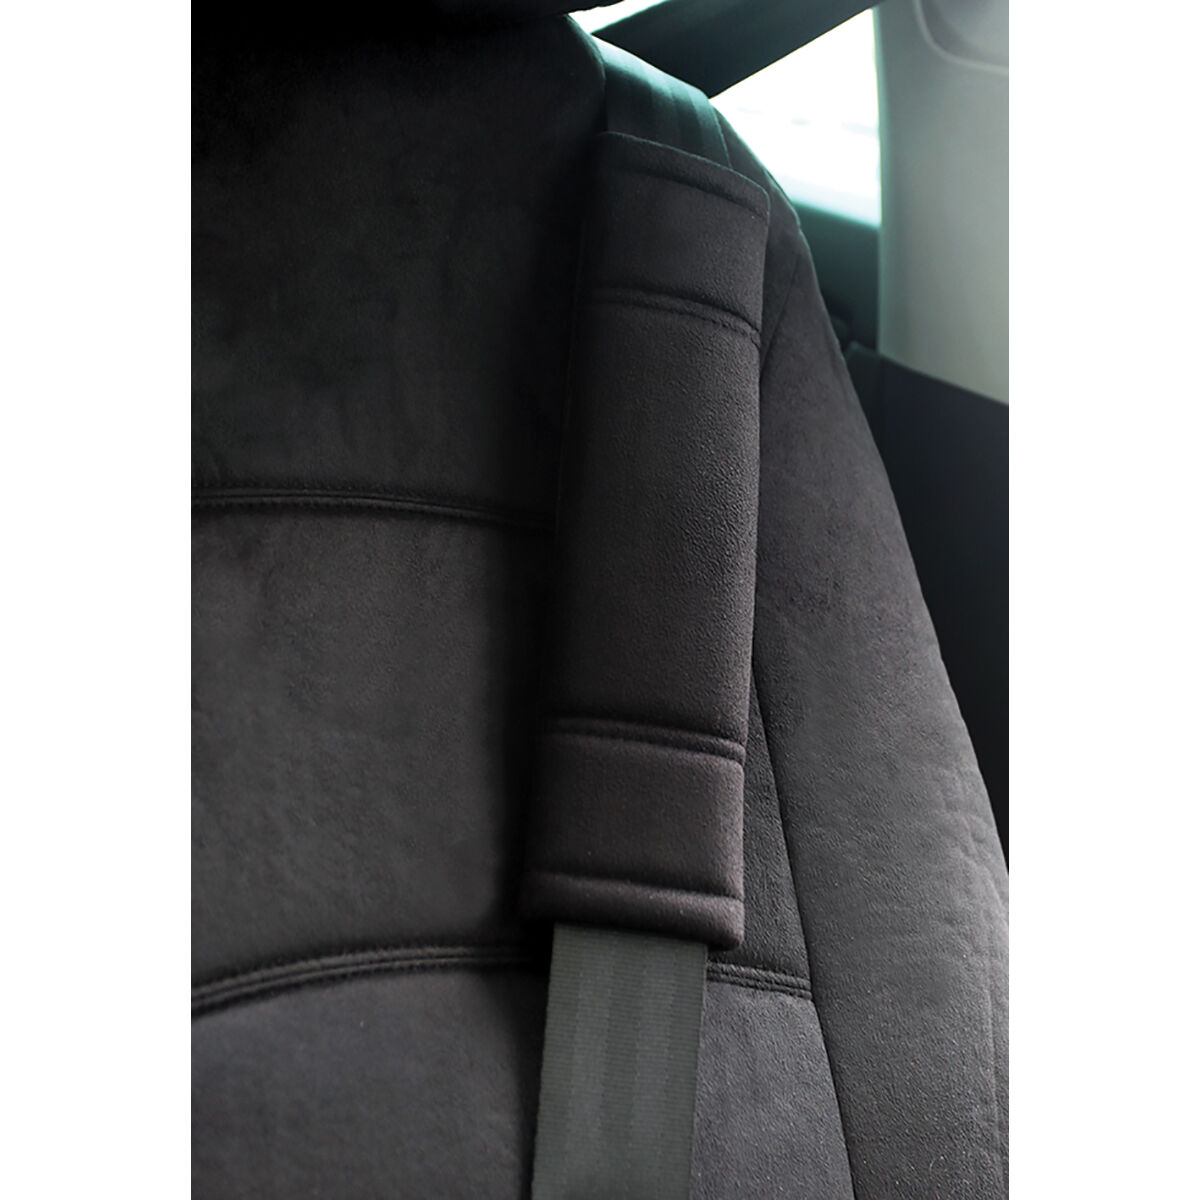 SENHAI 4 Pcs Seat Belt Pads 2 Black and 2 Gray Plaid Cotton Soft and Comfortable Seatbelt Shoulder Strap Cover for Kids Adults 